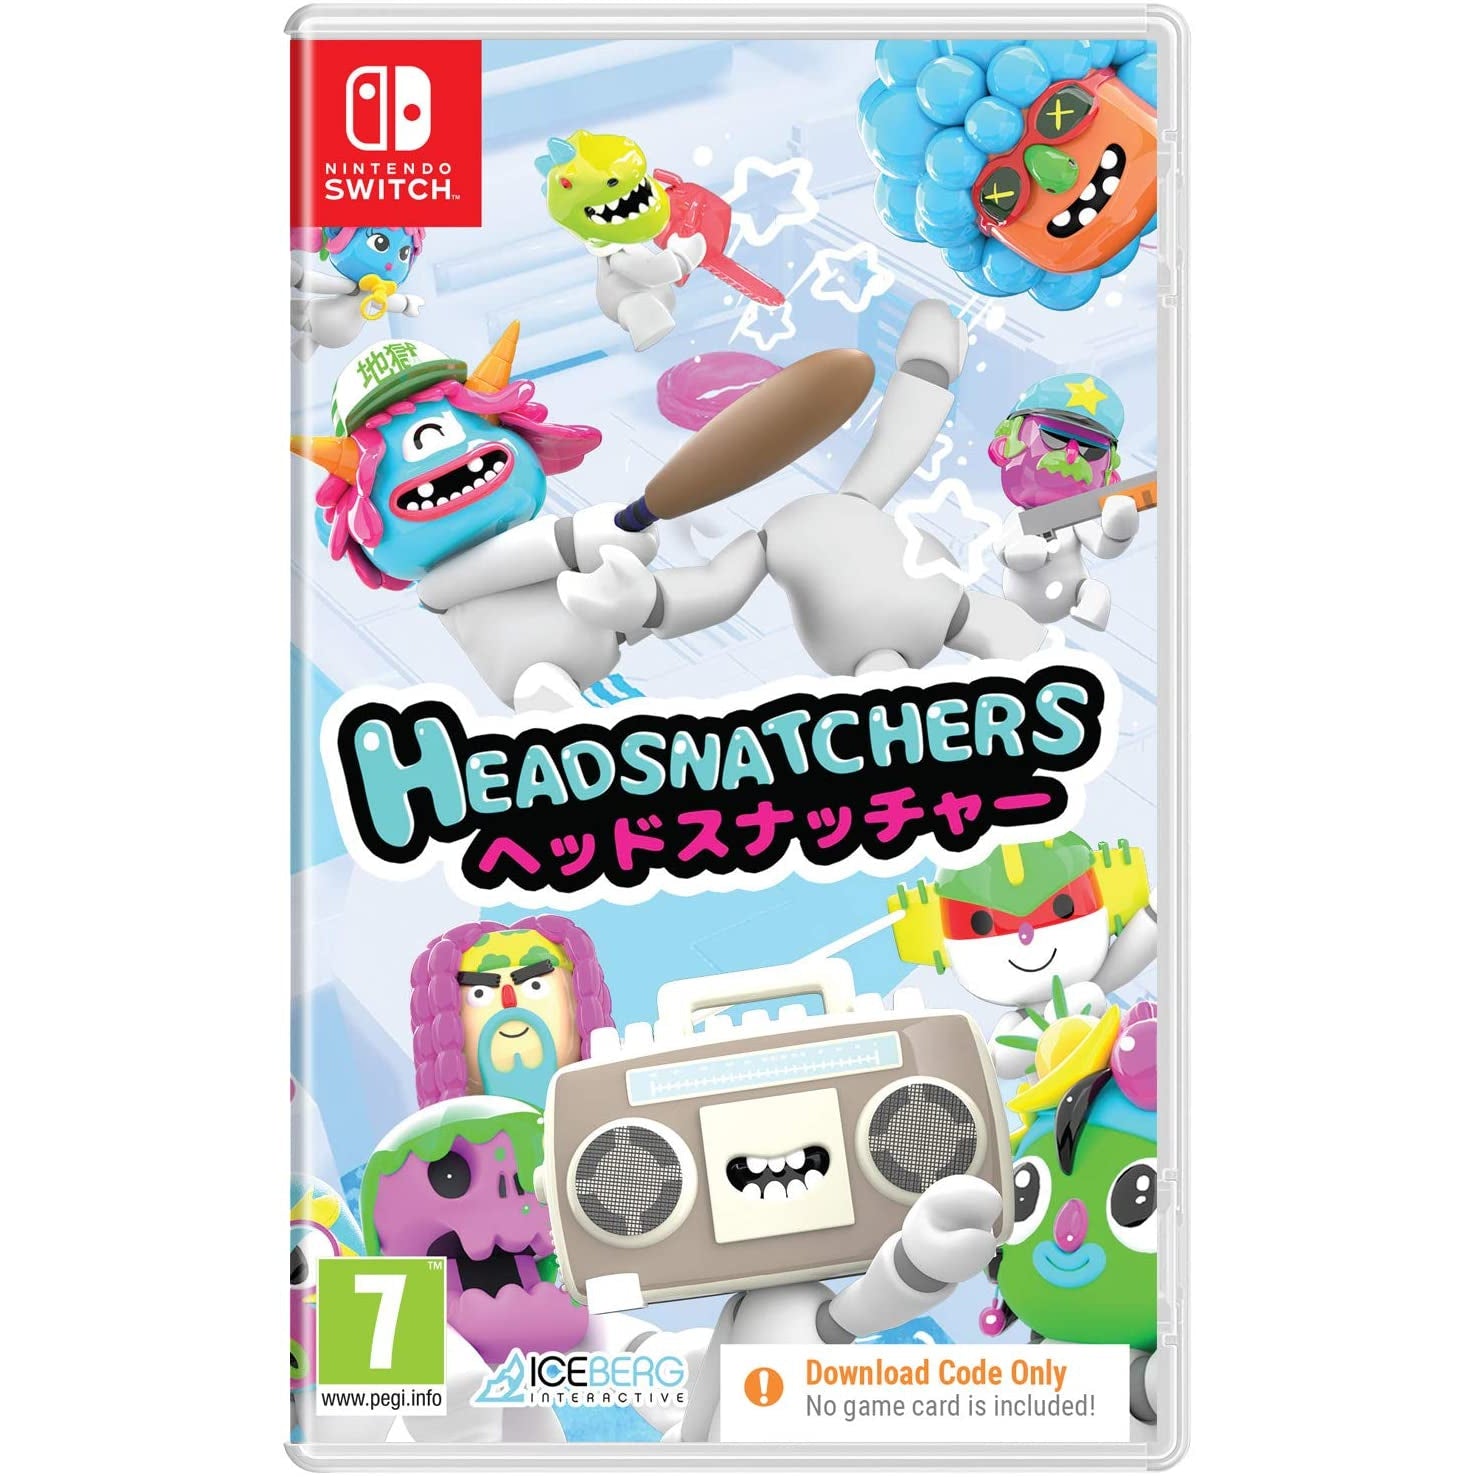 Headsnatchers (Nintendo Switch) - [DIGITAL CODE EDITION]